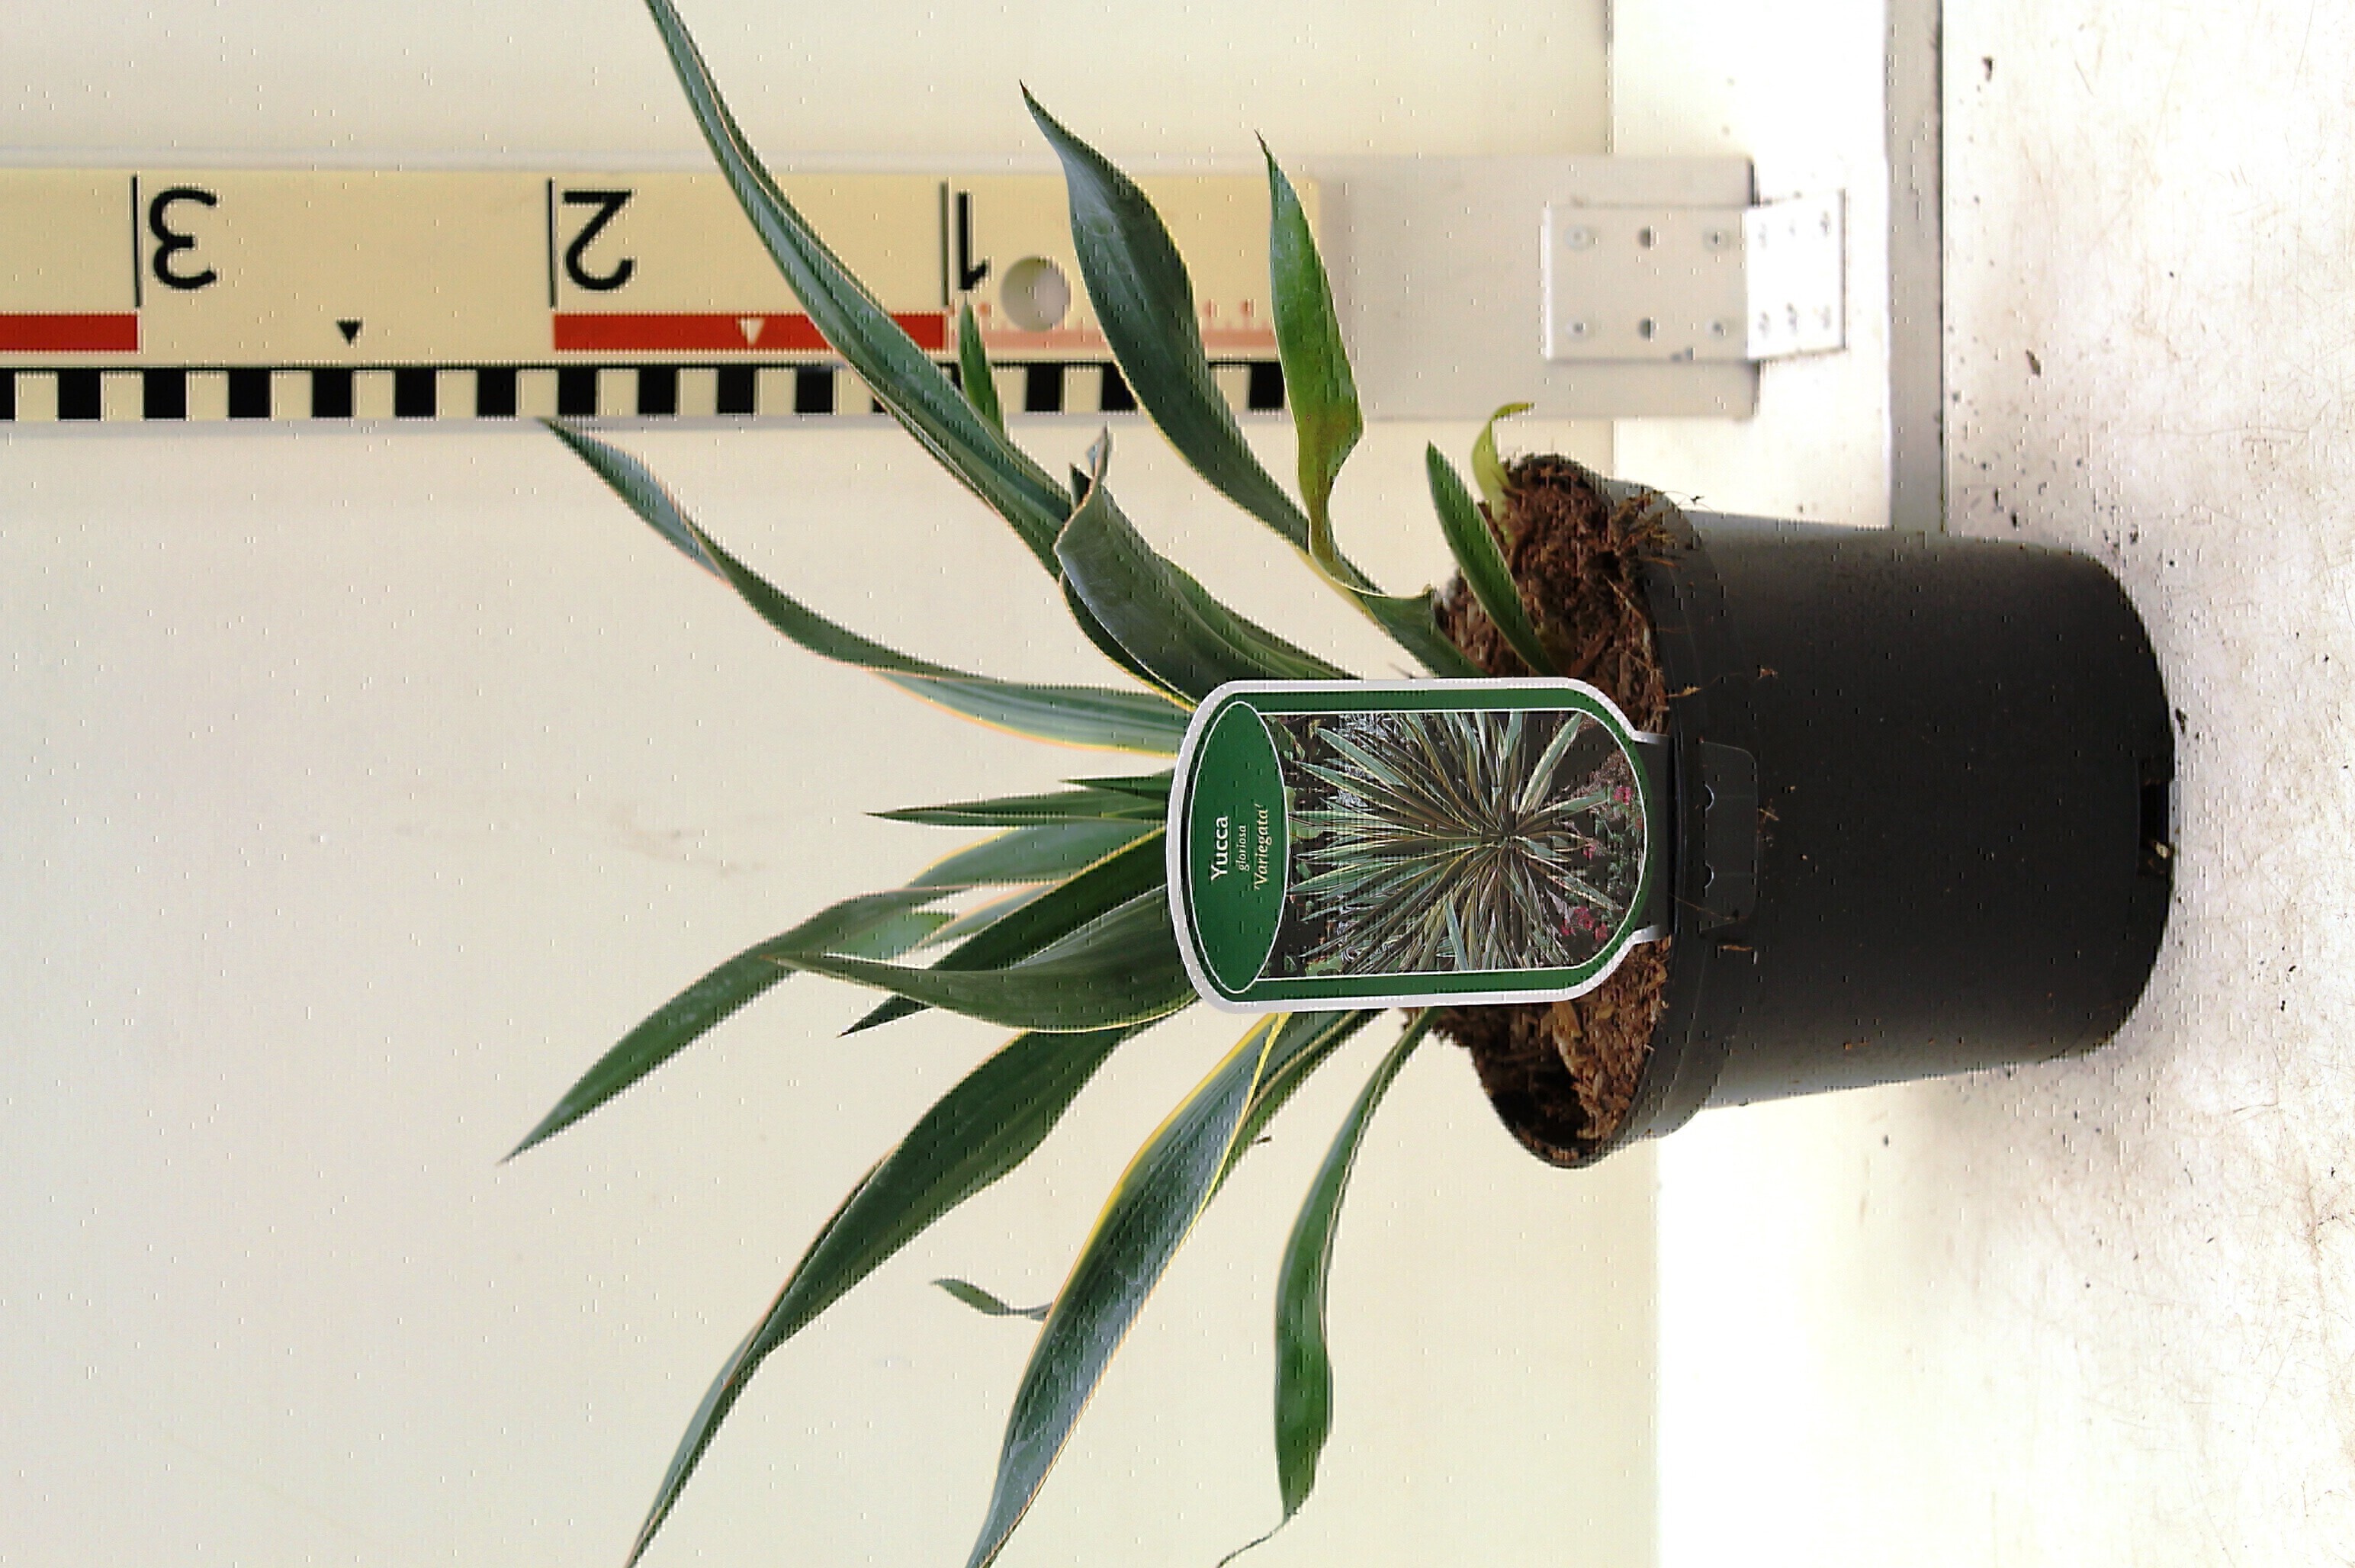 Yucca gloriosa 'Variegata' c2